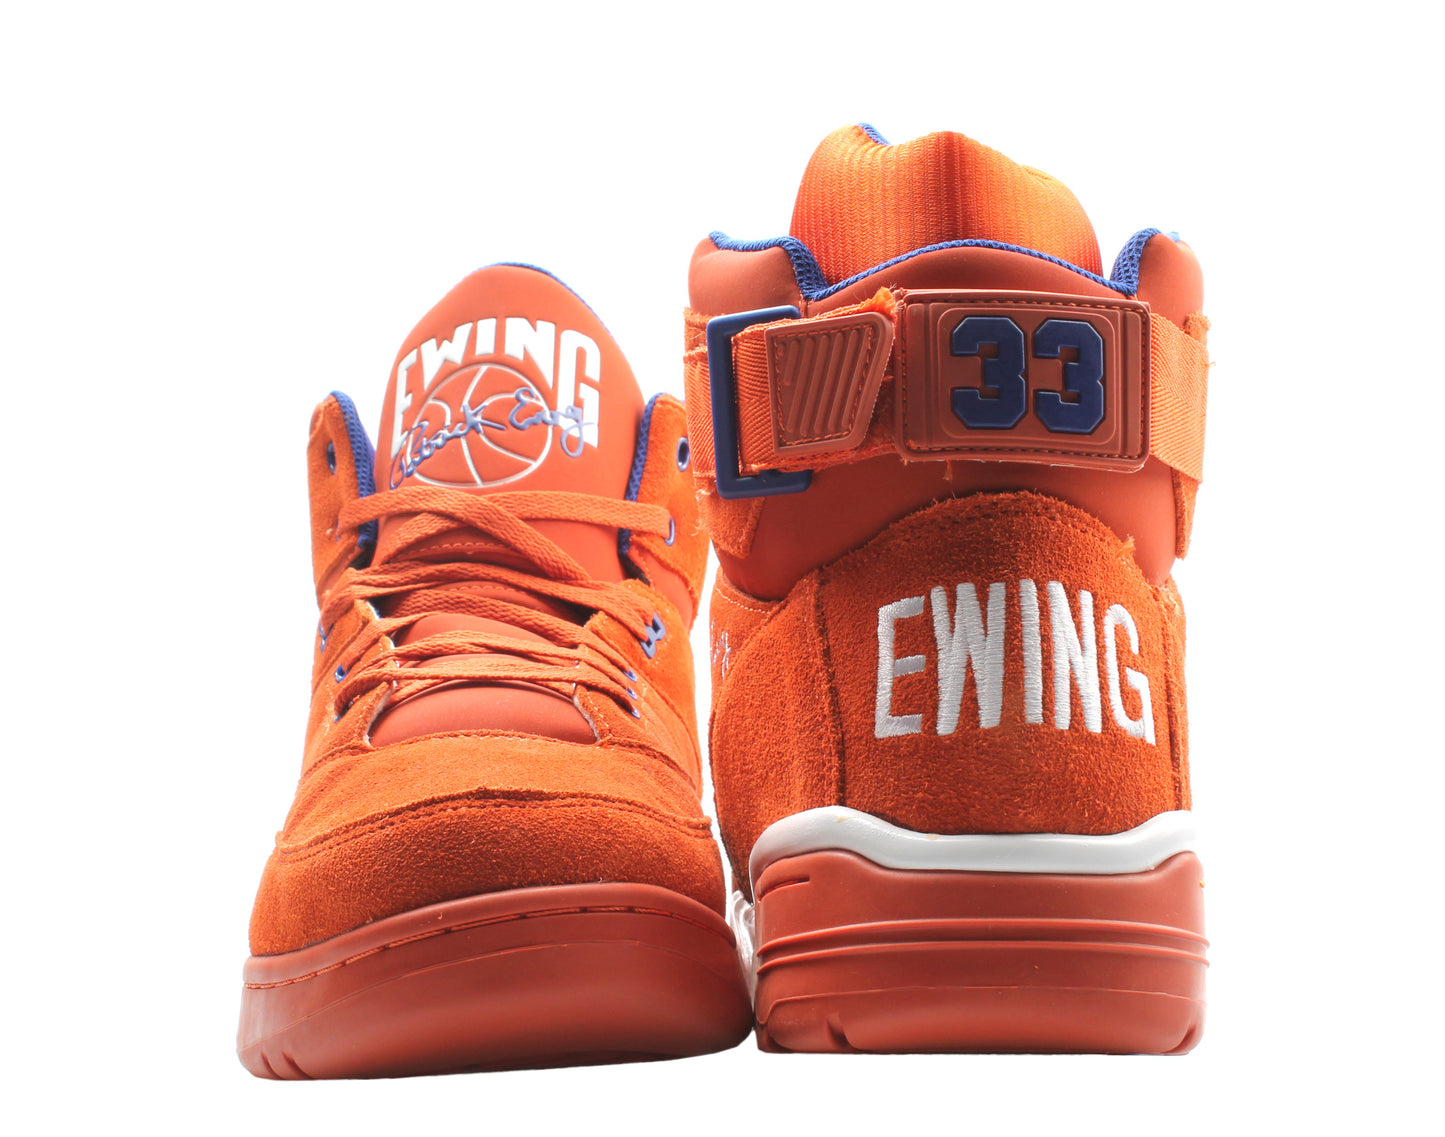 Ewing Athletics Ewing 33 Hi NYC MECCA Men's Basketball Shoes